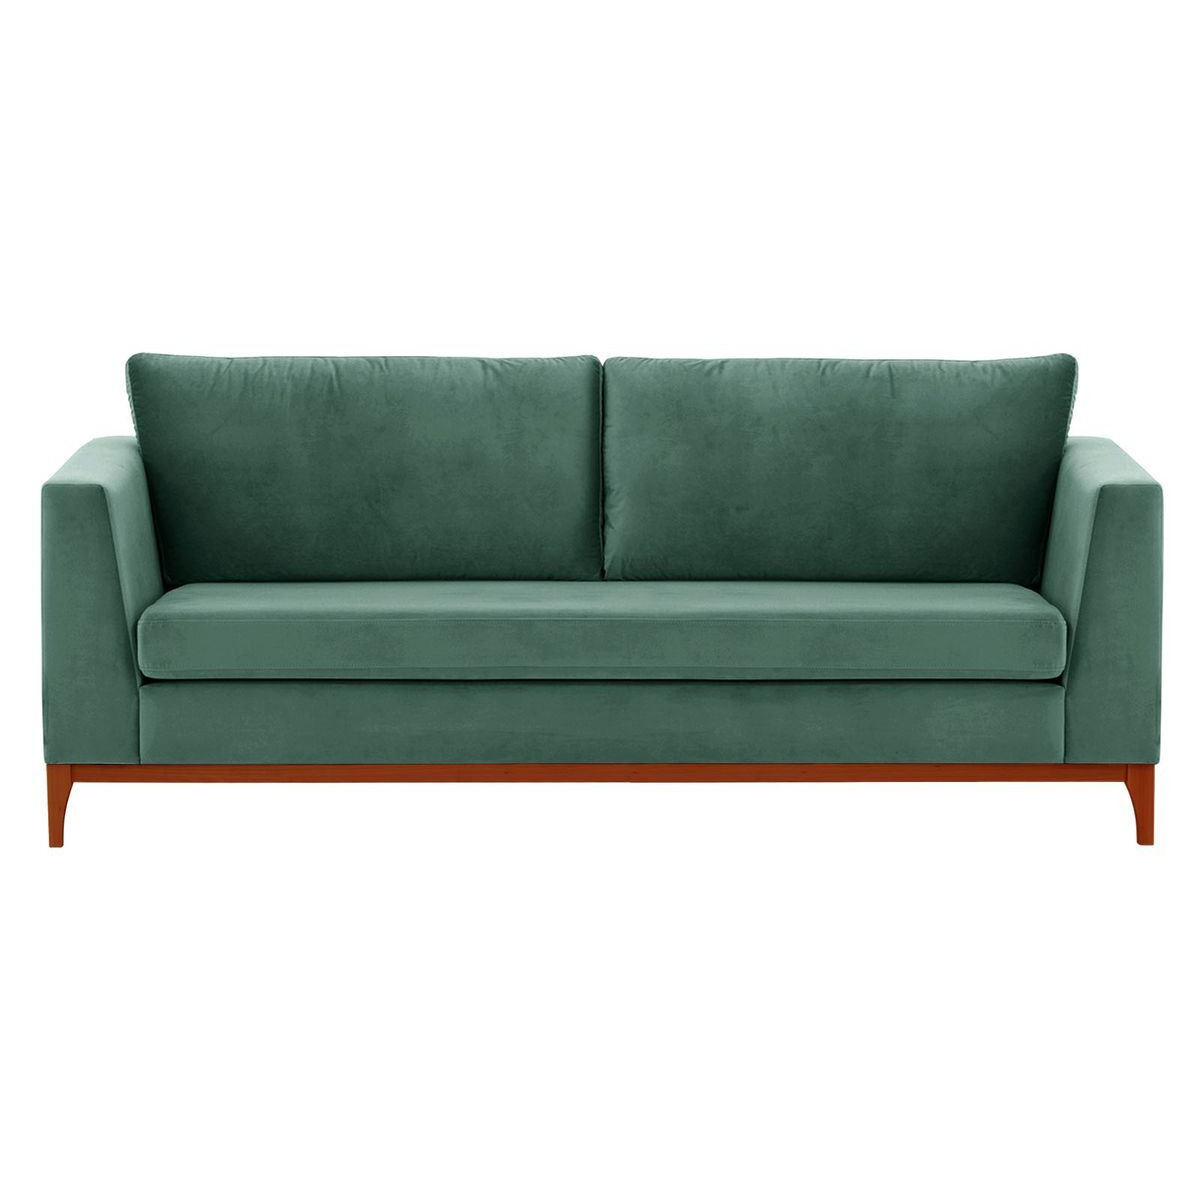 Gosena Wood 3 Seater Sofa, dirty blue, Leg colour: aveo - image 1